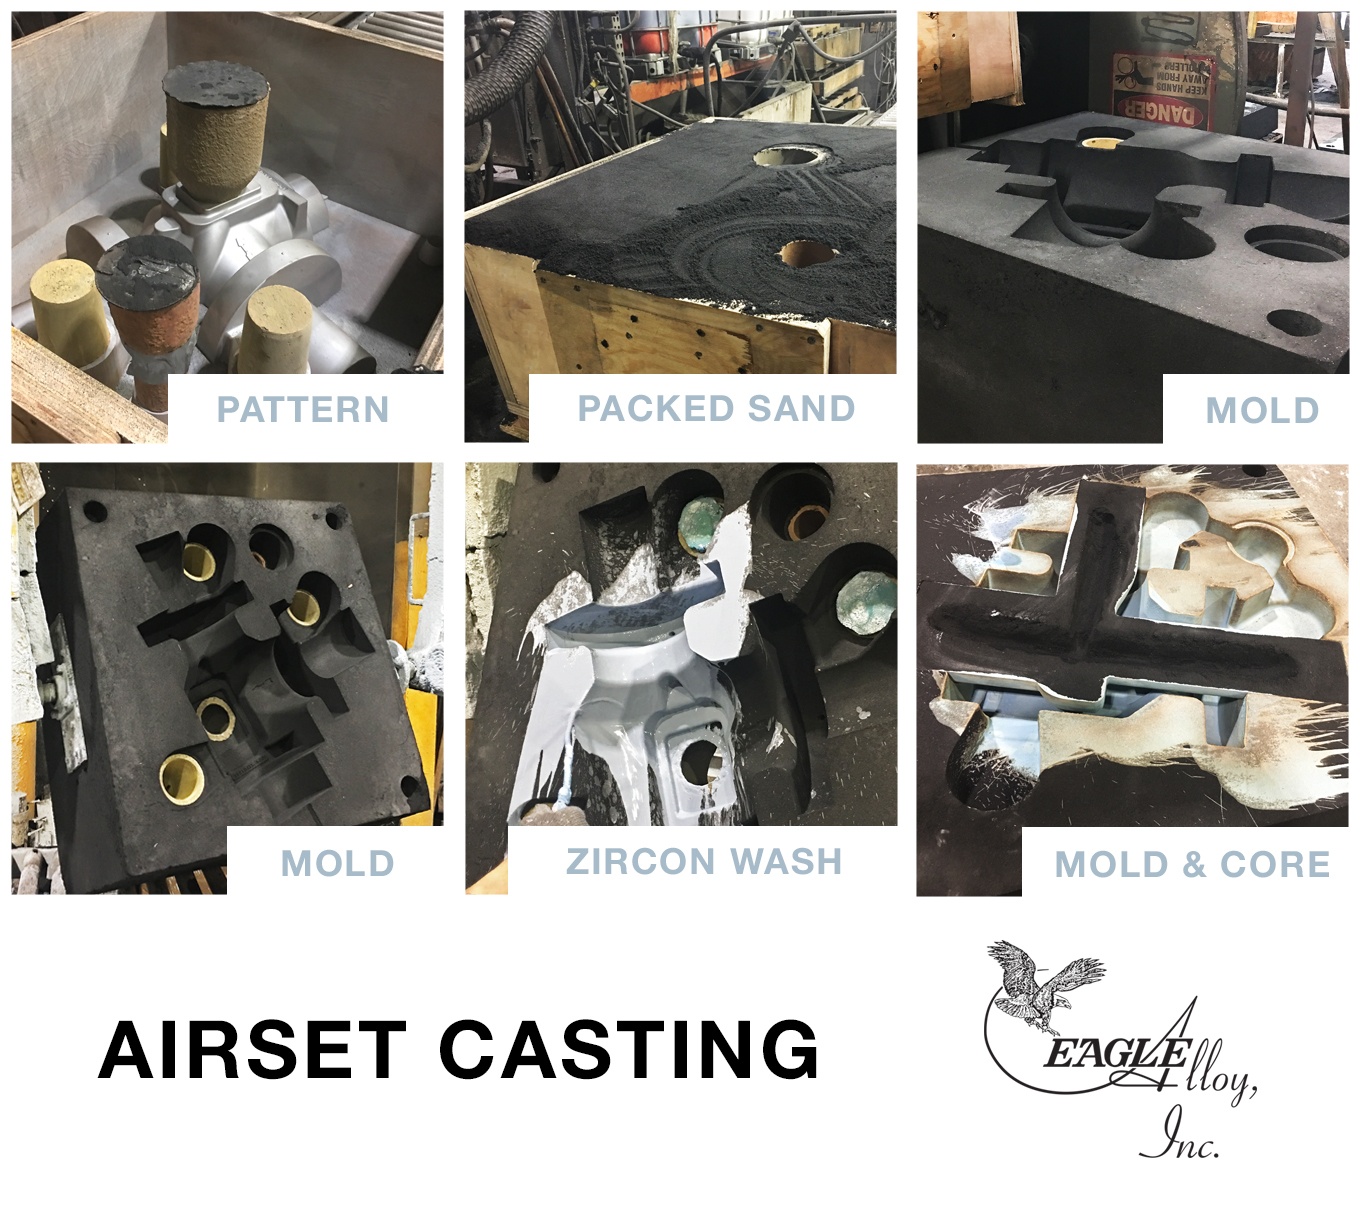 Airset Casting at Eagle Alloy, Inc. -  the airset casting process